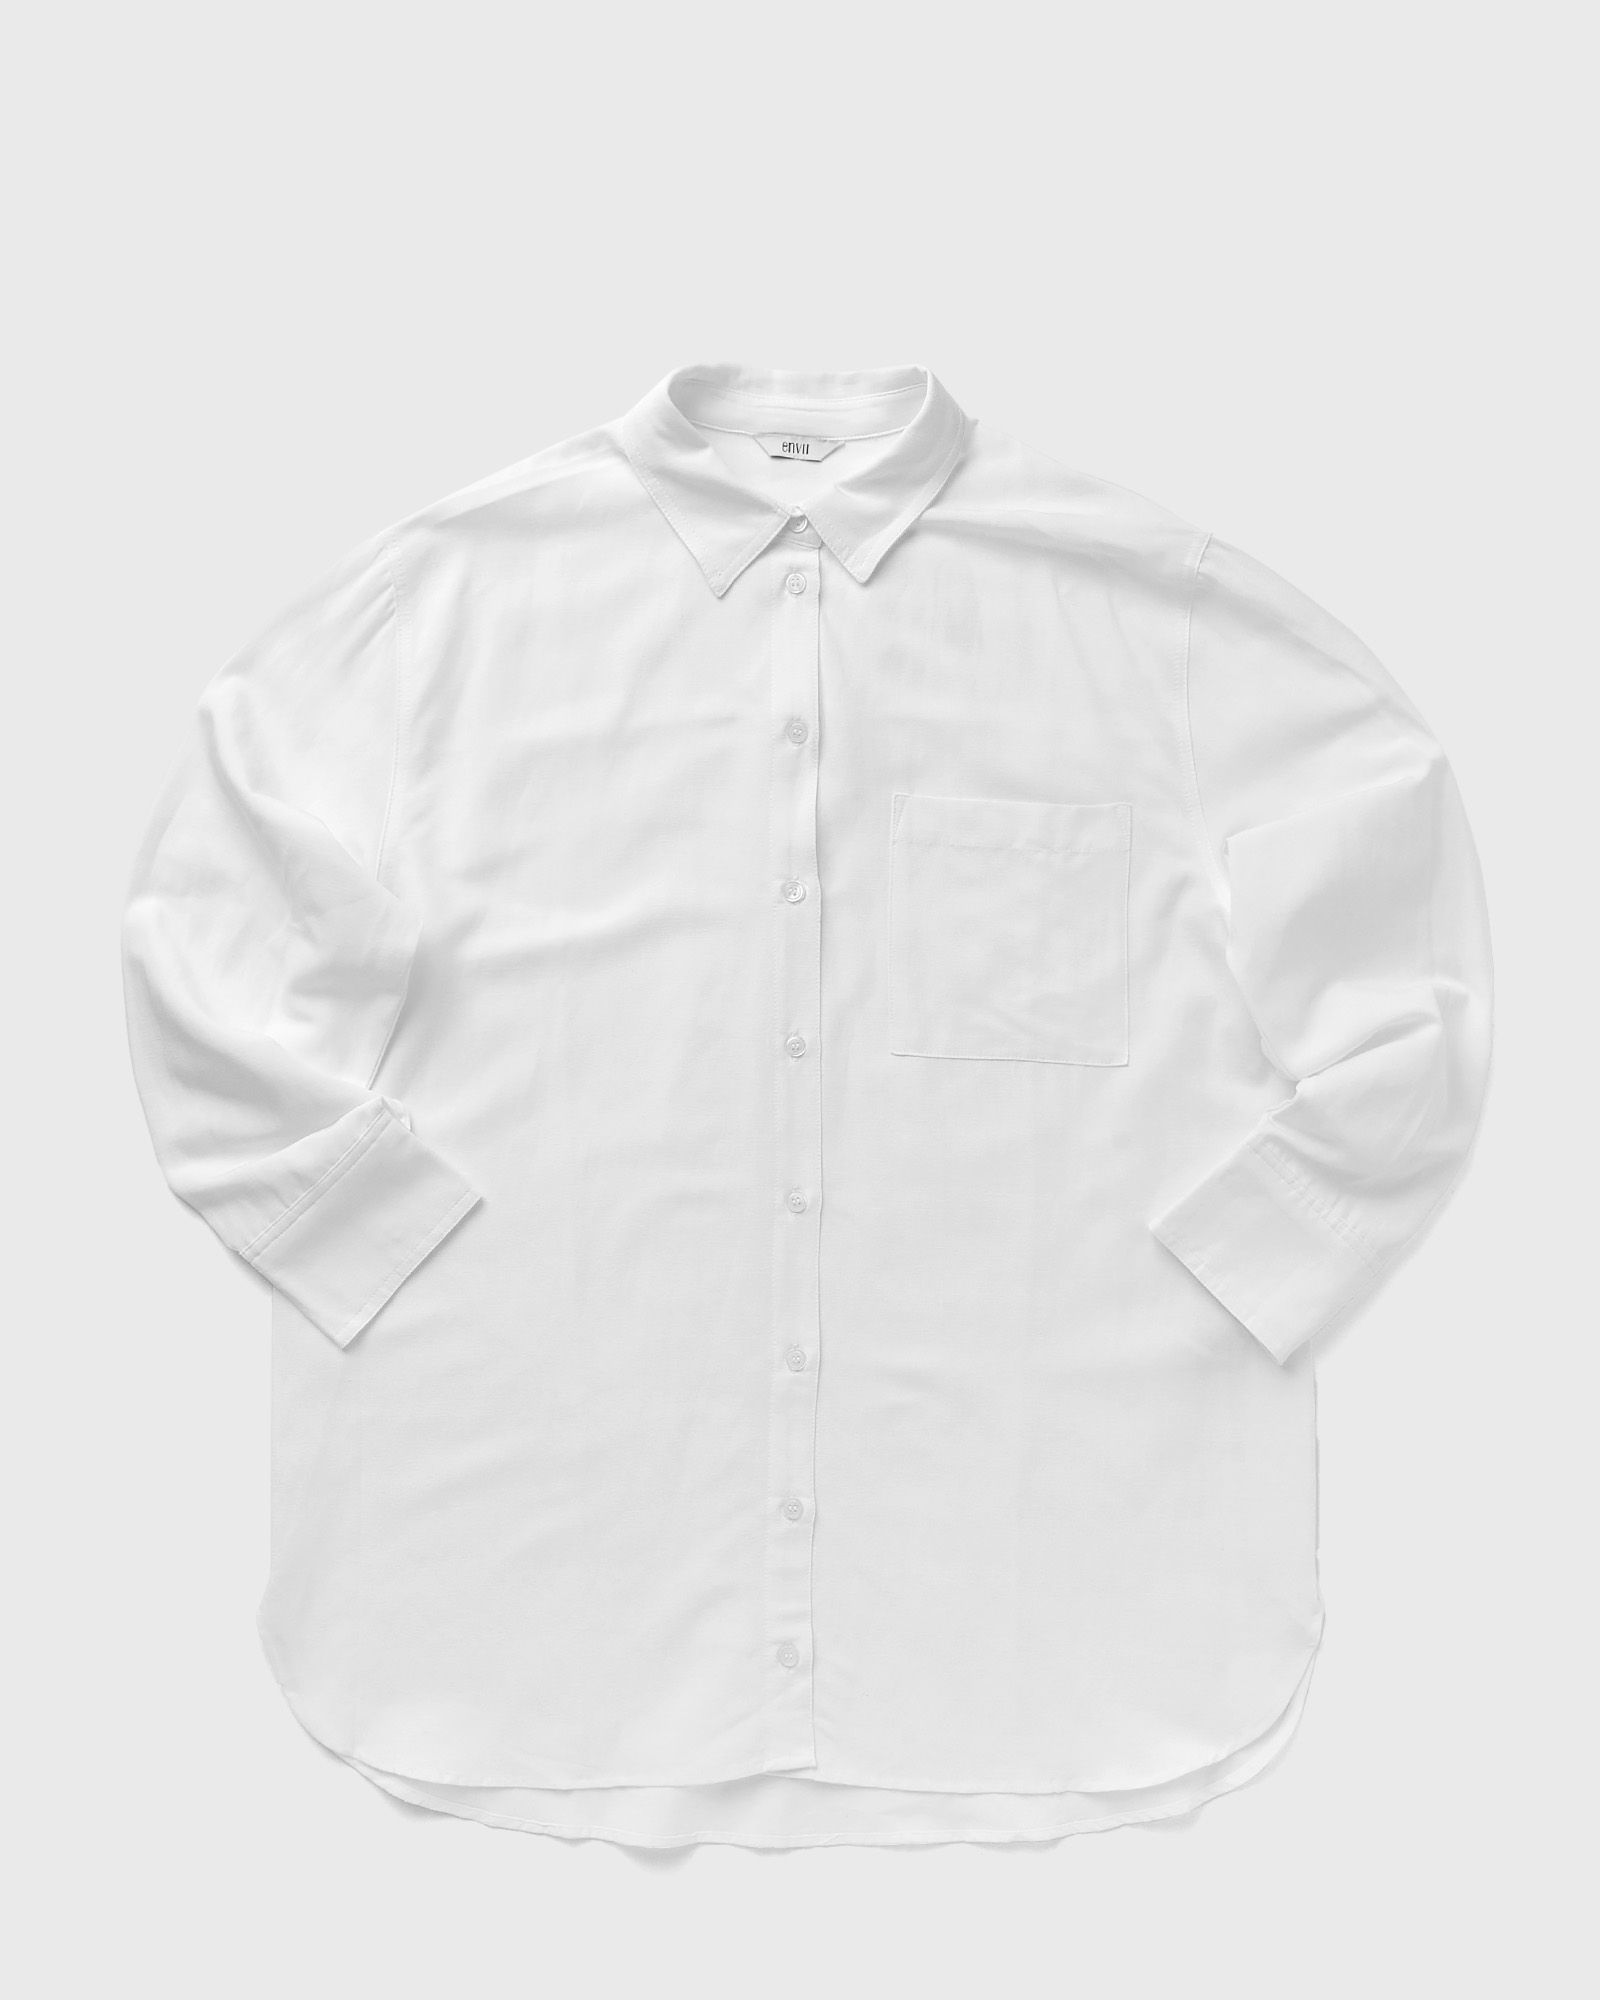 Envii - ensplit ls shirt 6903 women shirts & blouses white in größe:m